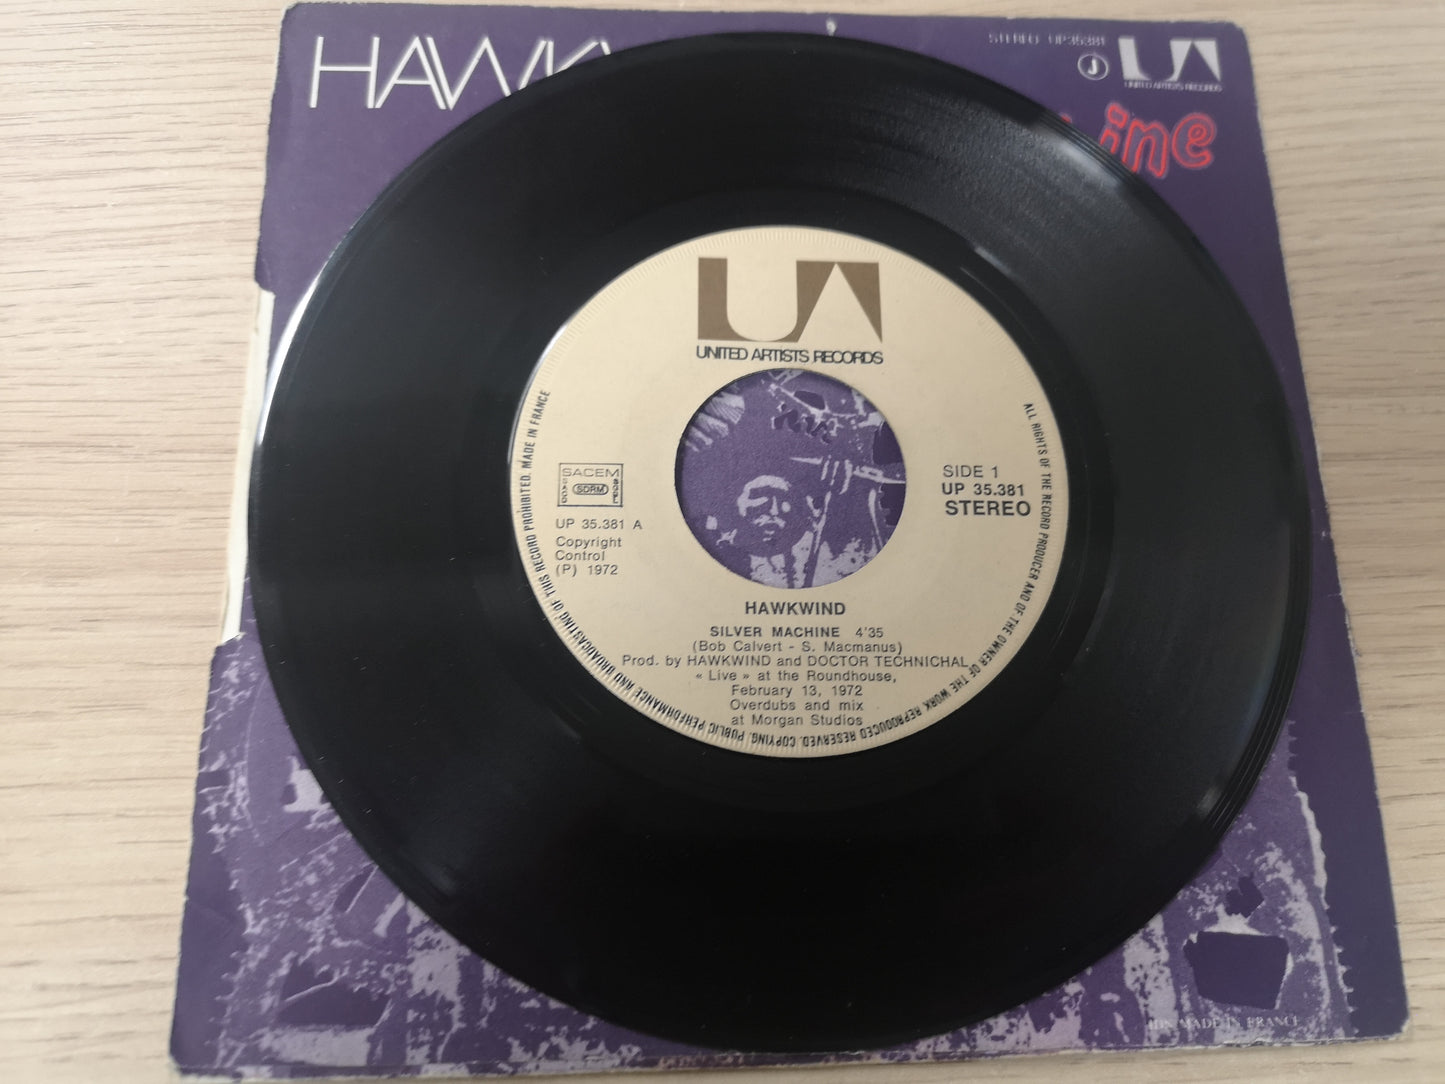 Hawkwind "Silver Machine" Orig France 1972 VG++/VG (7" Single)